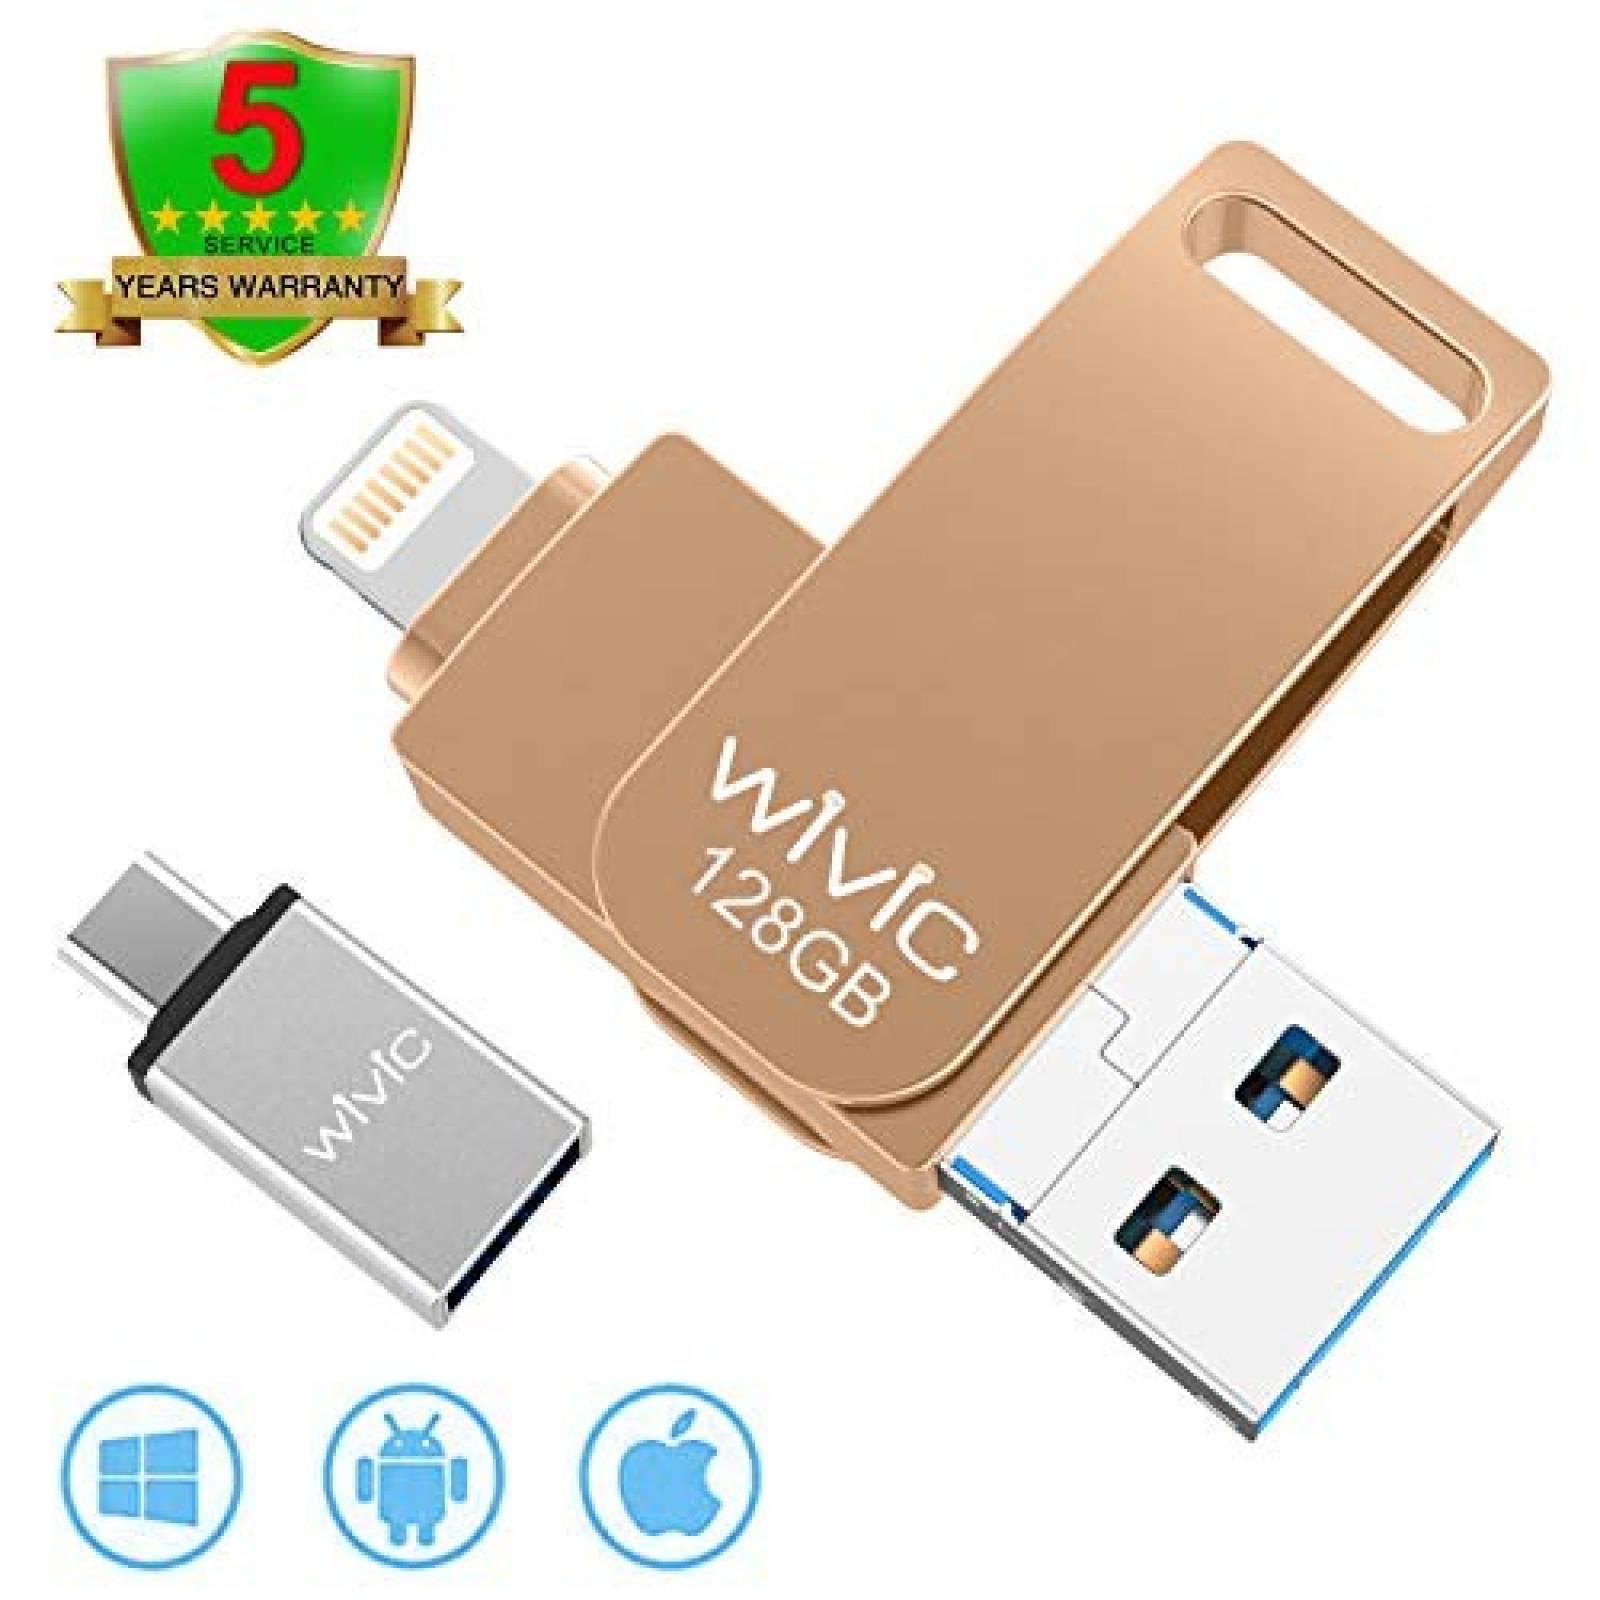 USB flash drive WIVIC para iPhone USB 3.0 128GB -Oro